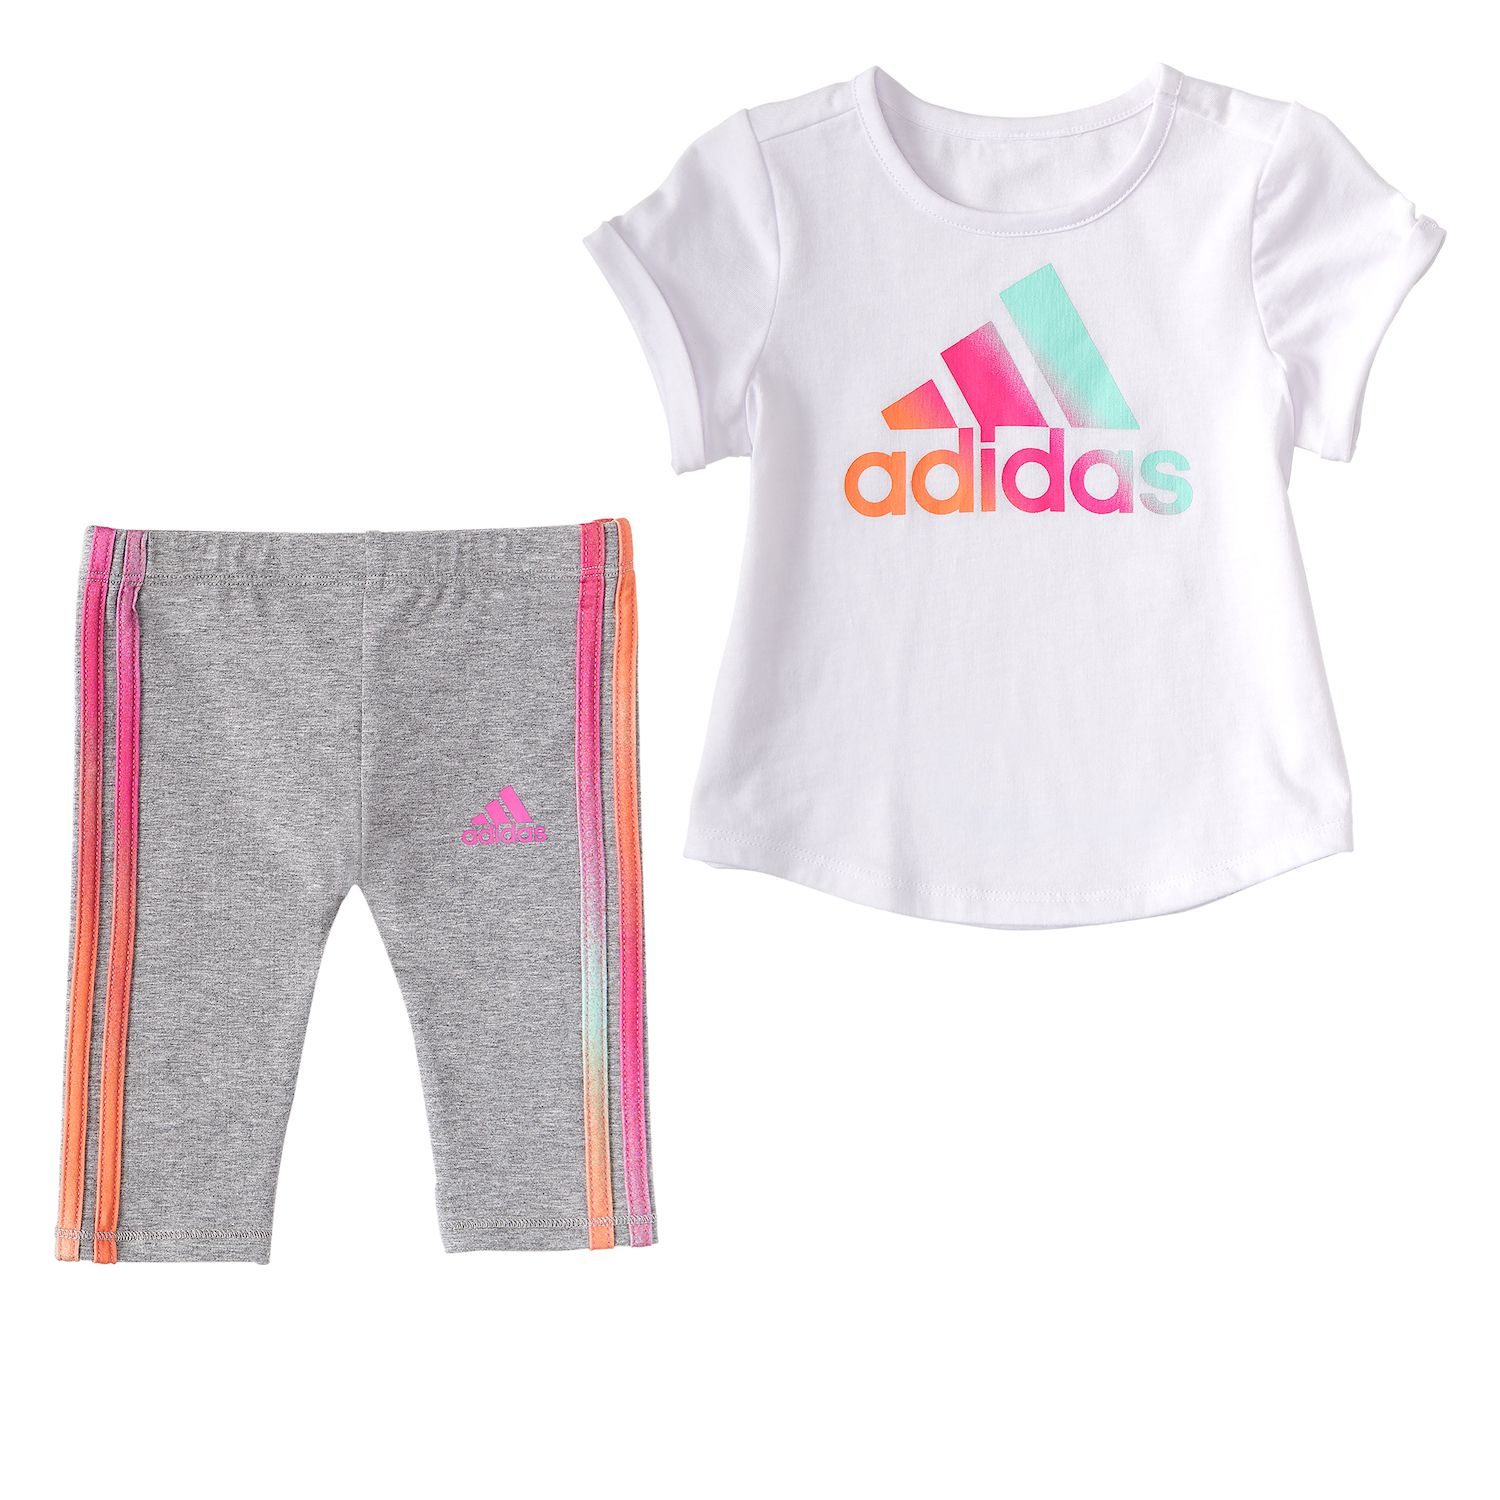 adidas baby clothes